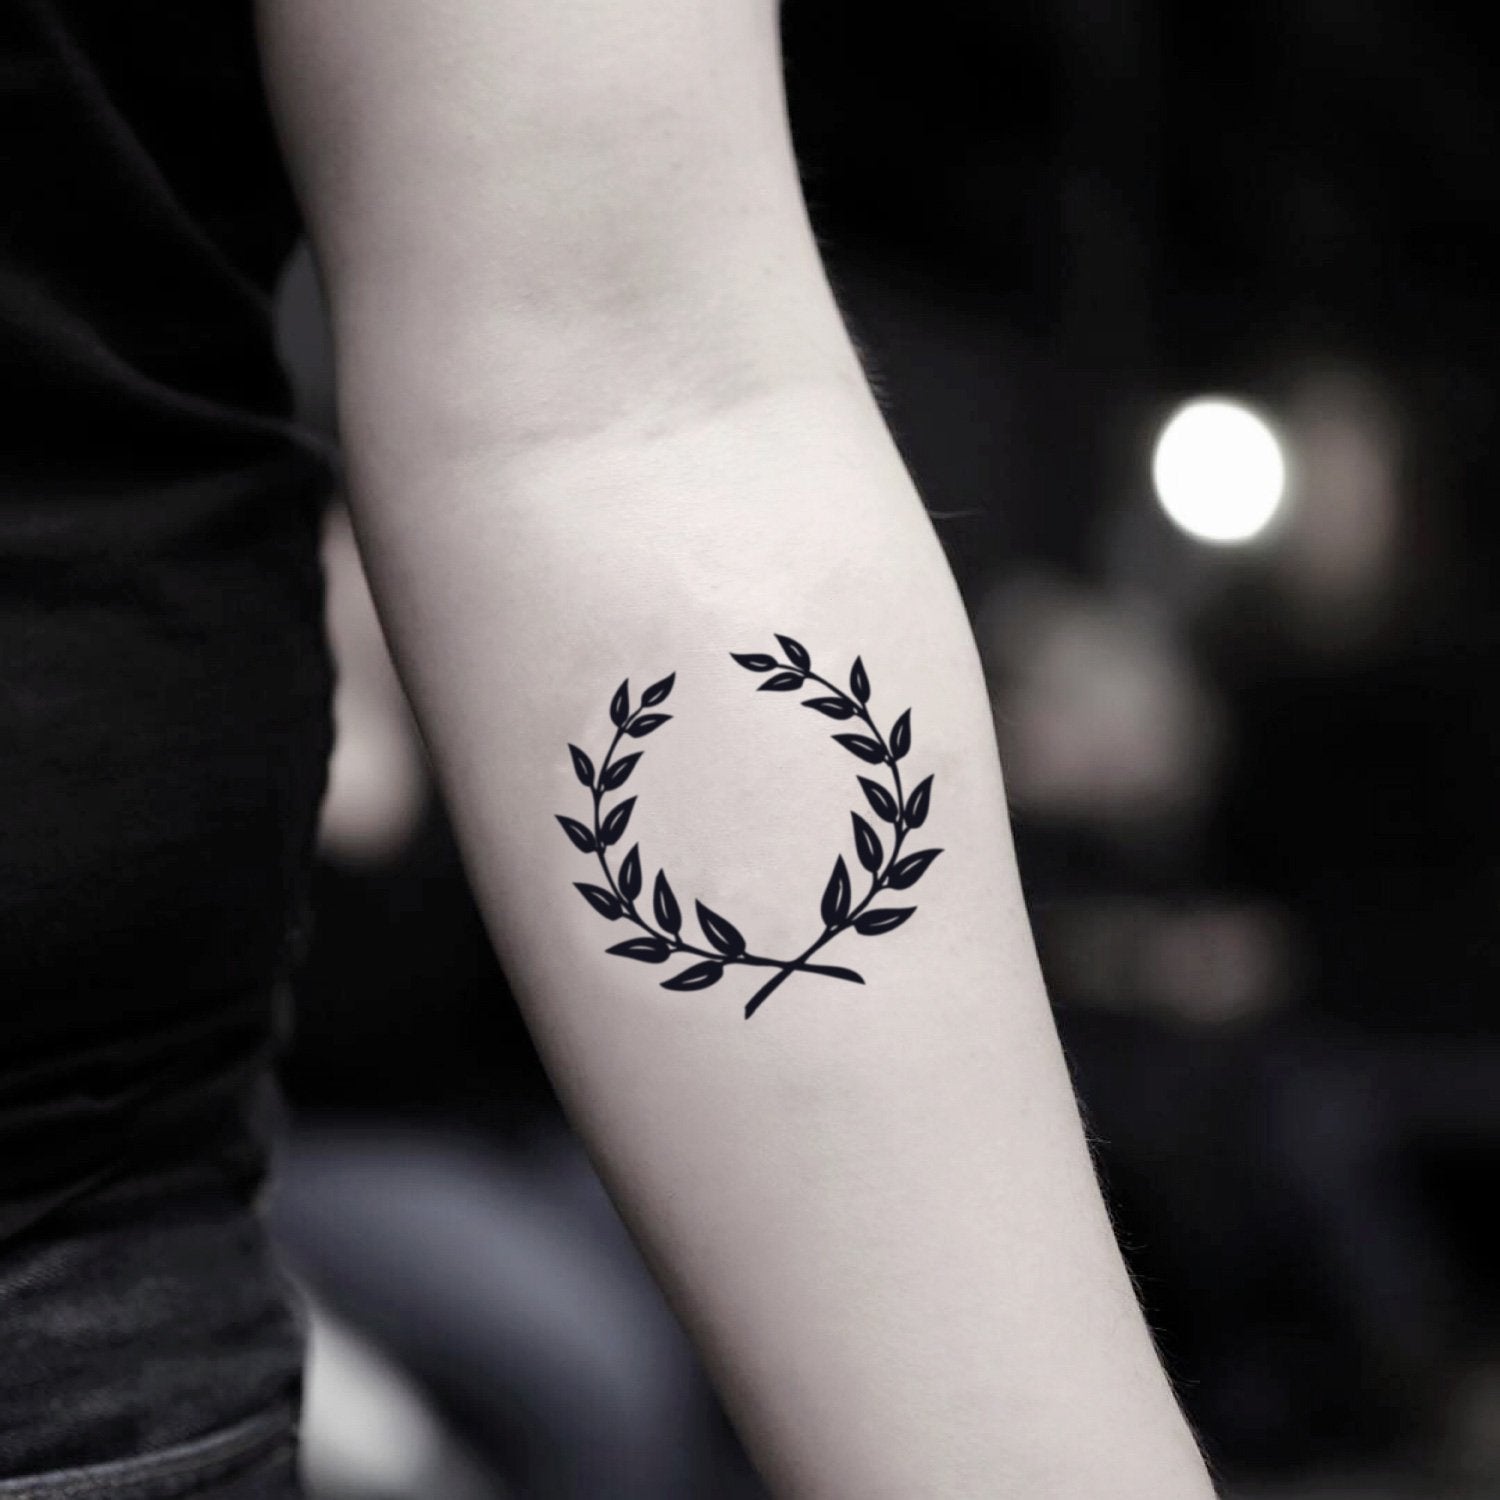 fake small laurel wreath minimalist temporary tattoo sticker design idea on inner arm